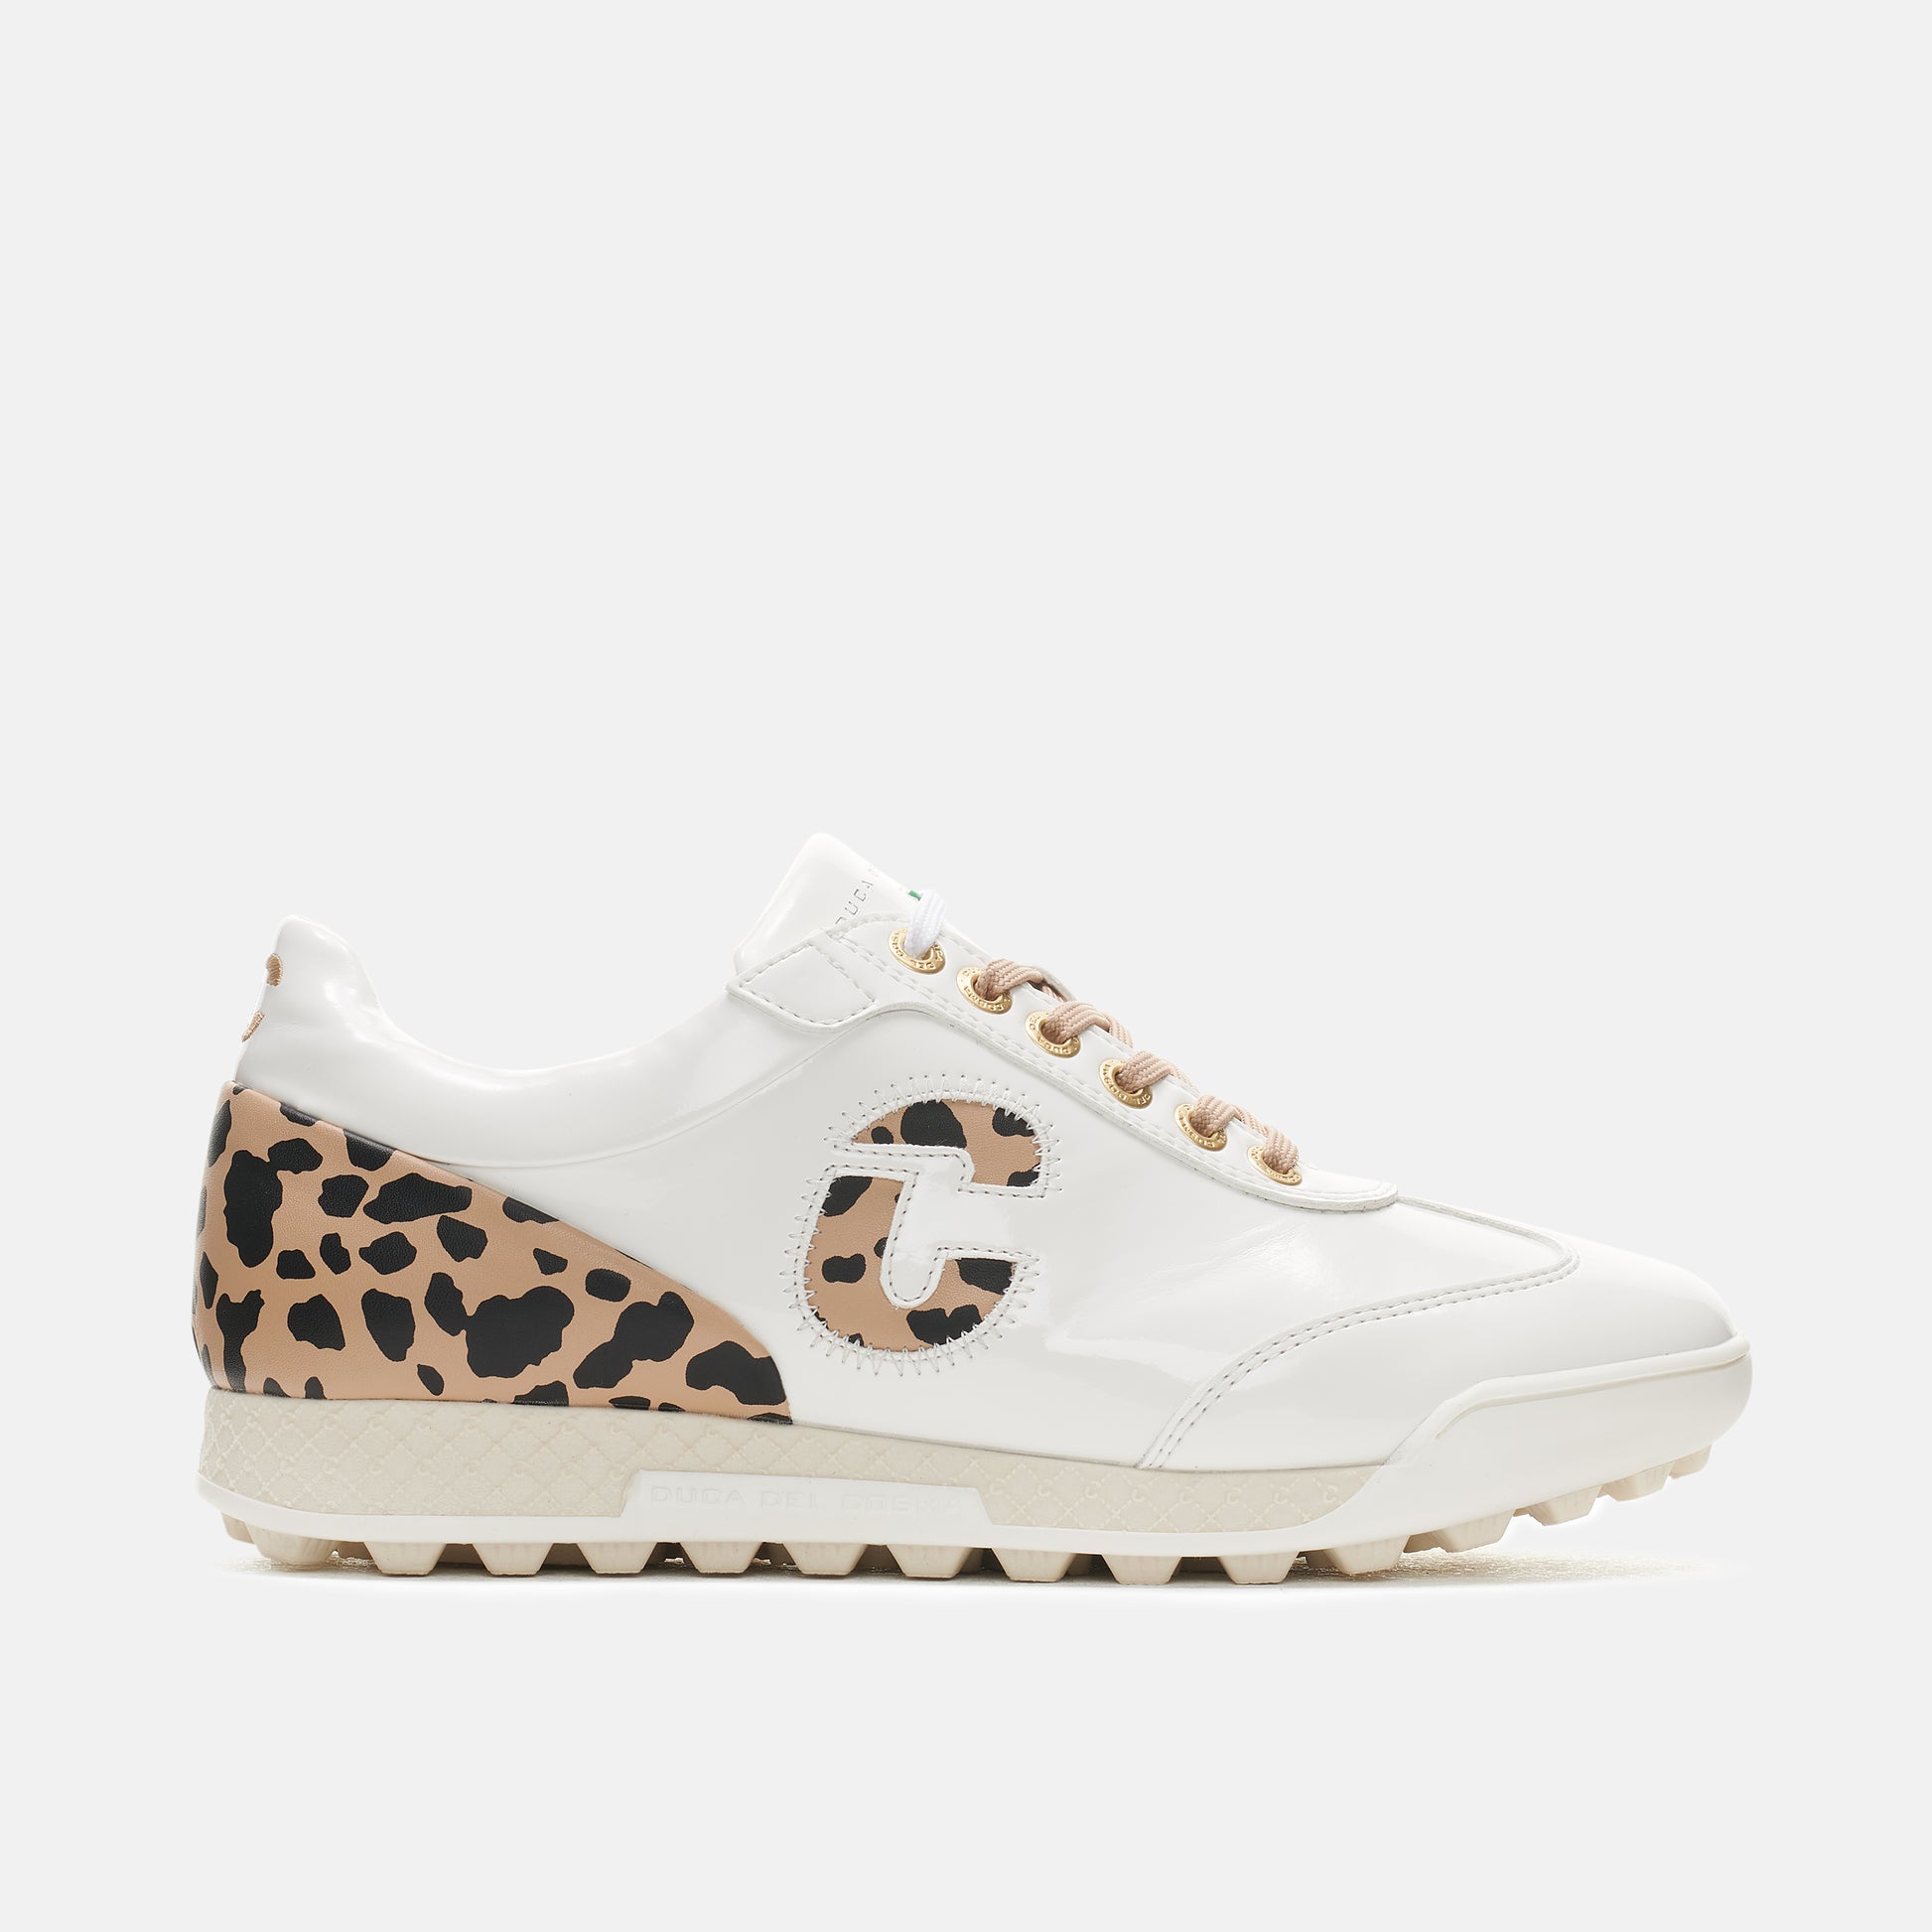 King Cheetah White - Women's Golf Shoe 